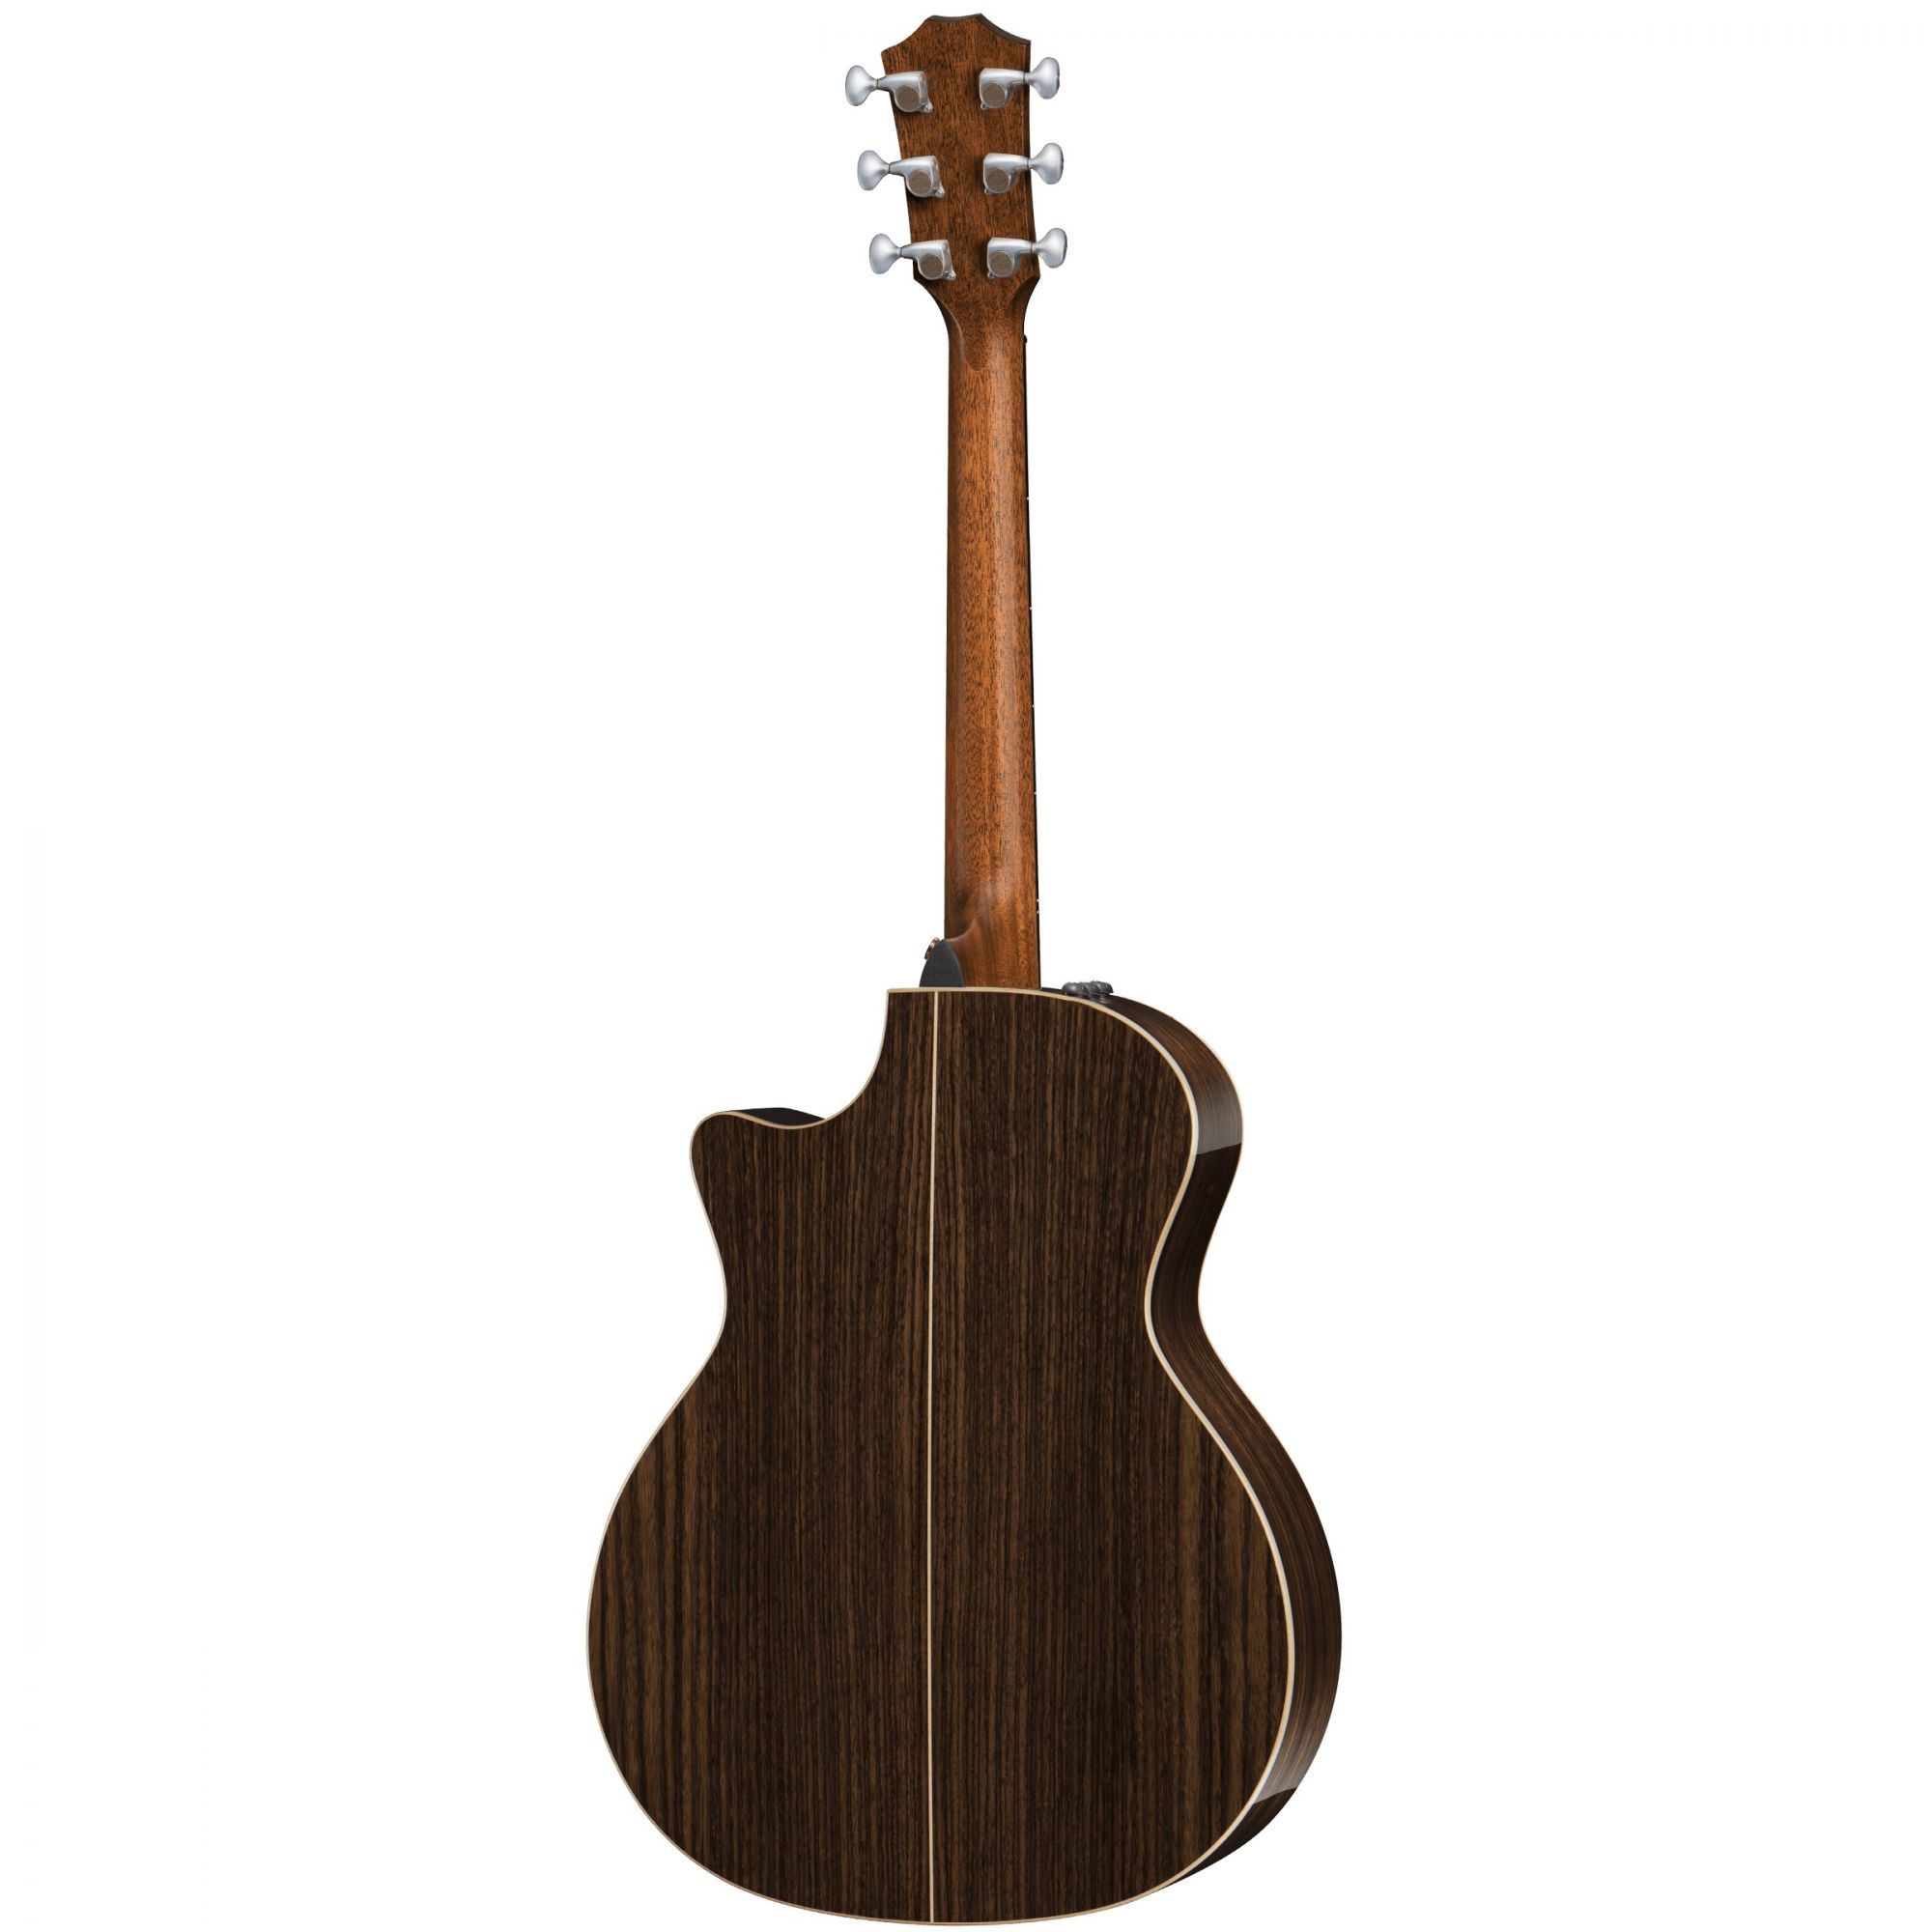 Taylor 814ce DLX V-Class Grand Auditorium Acoustic-Electric Guitar